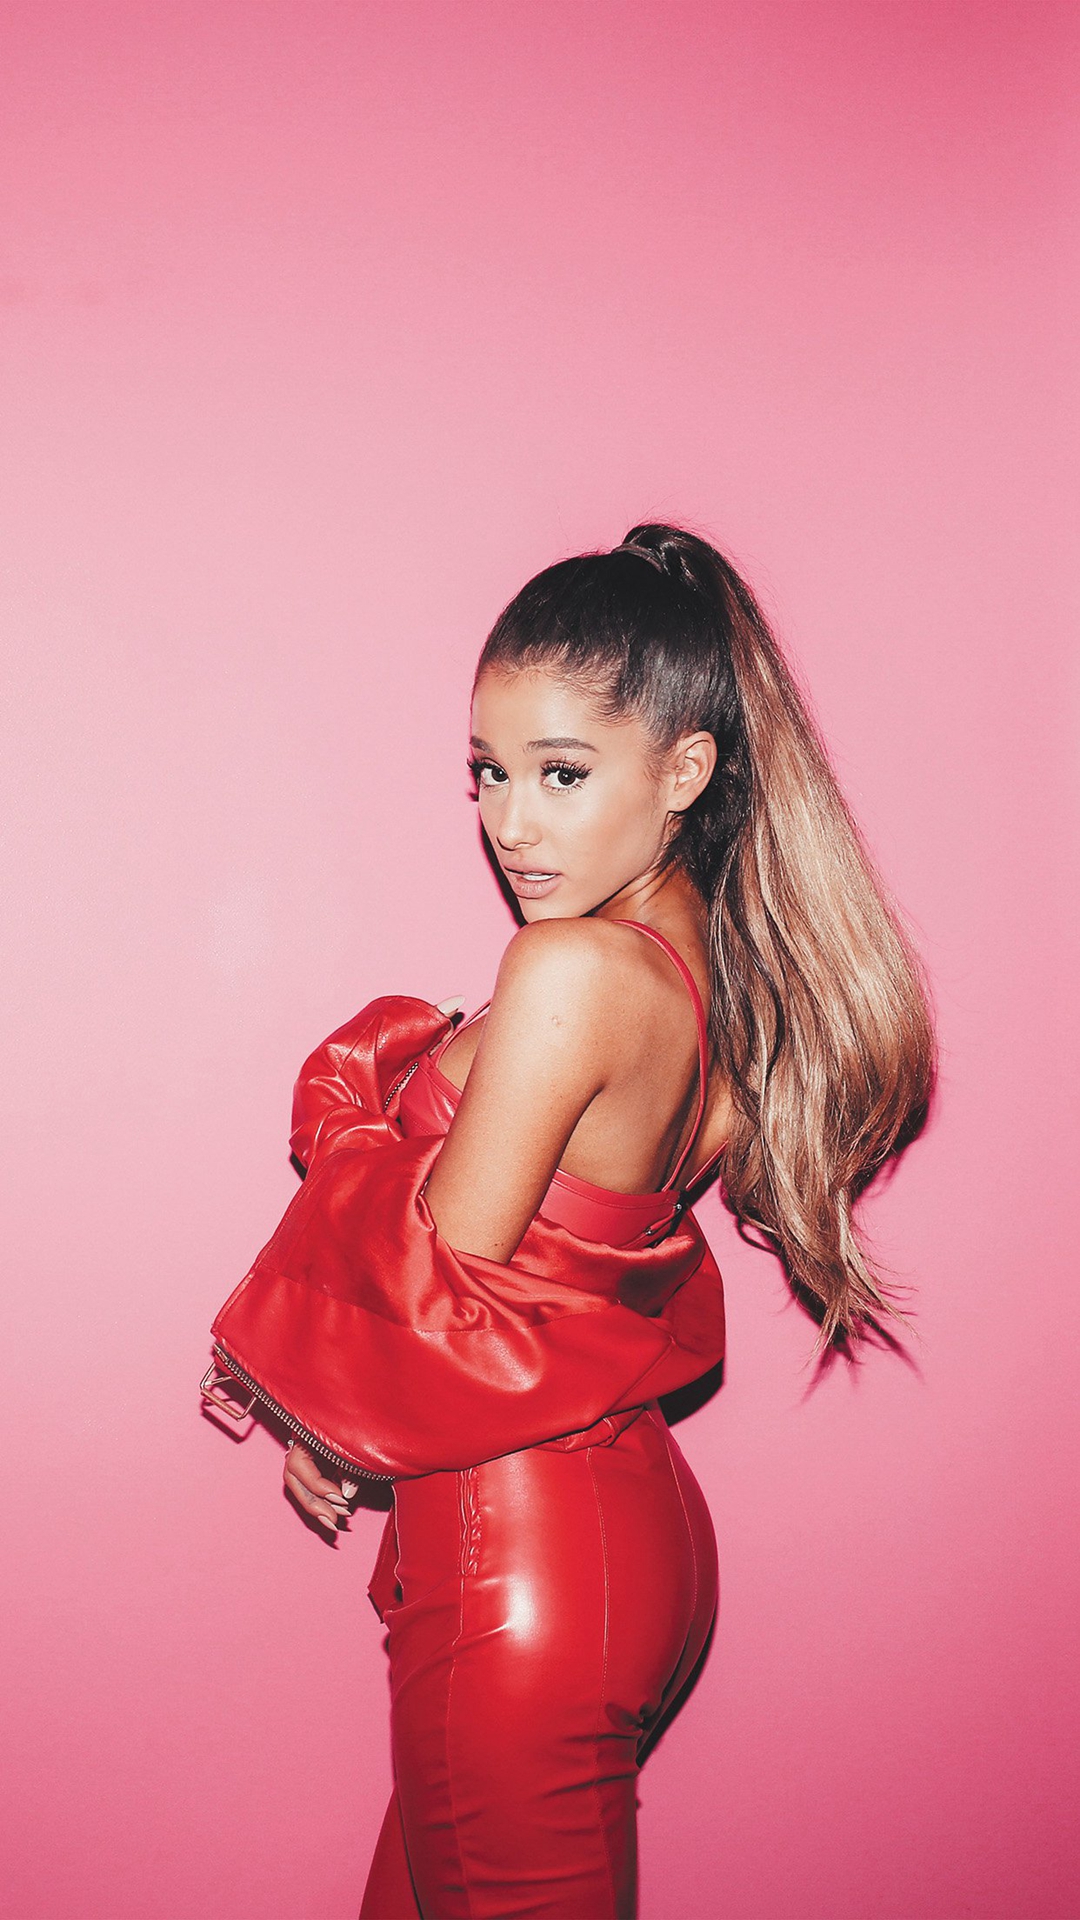 Ariana Grande Pink Pose Music Girl iPhone 8 Wallpaper Free